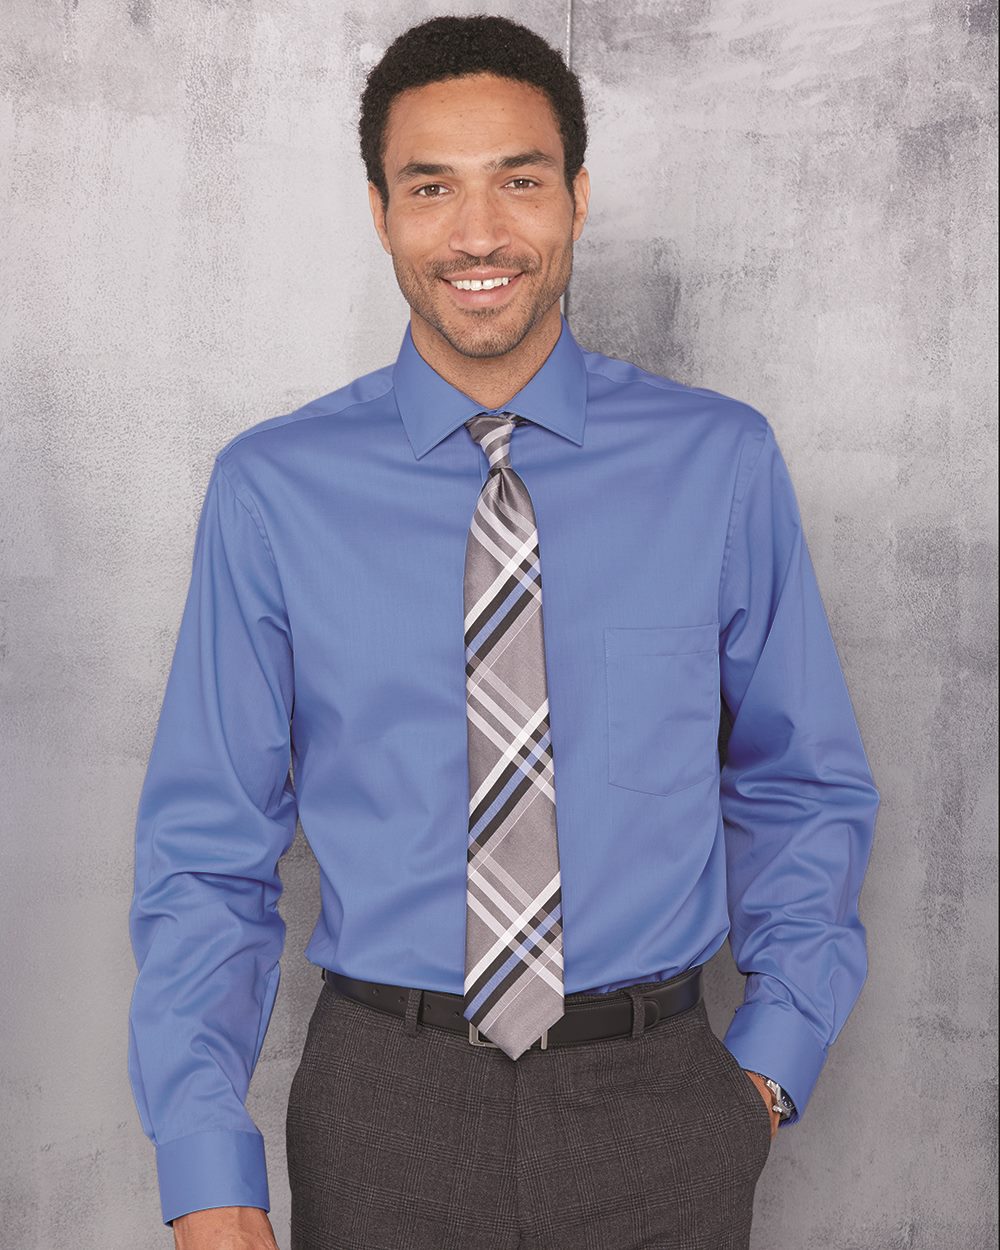 Van Heusen 13V0439 - Flex Collar Long Sleeve Shirt